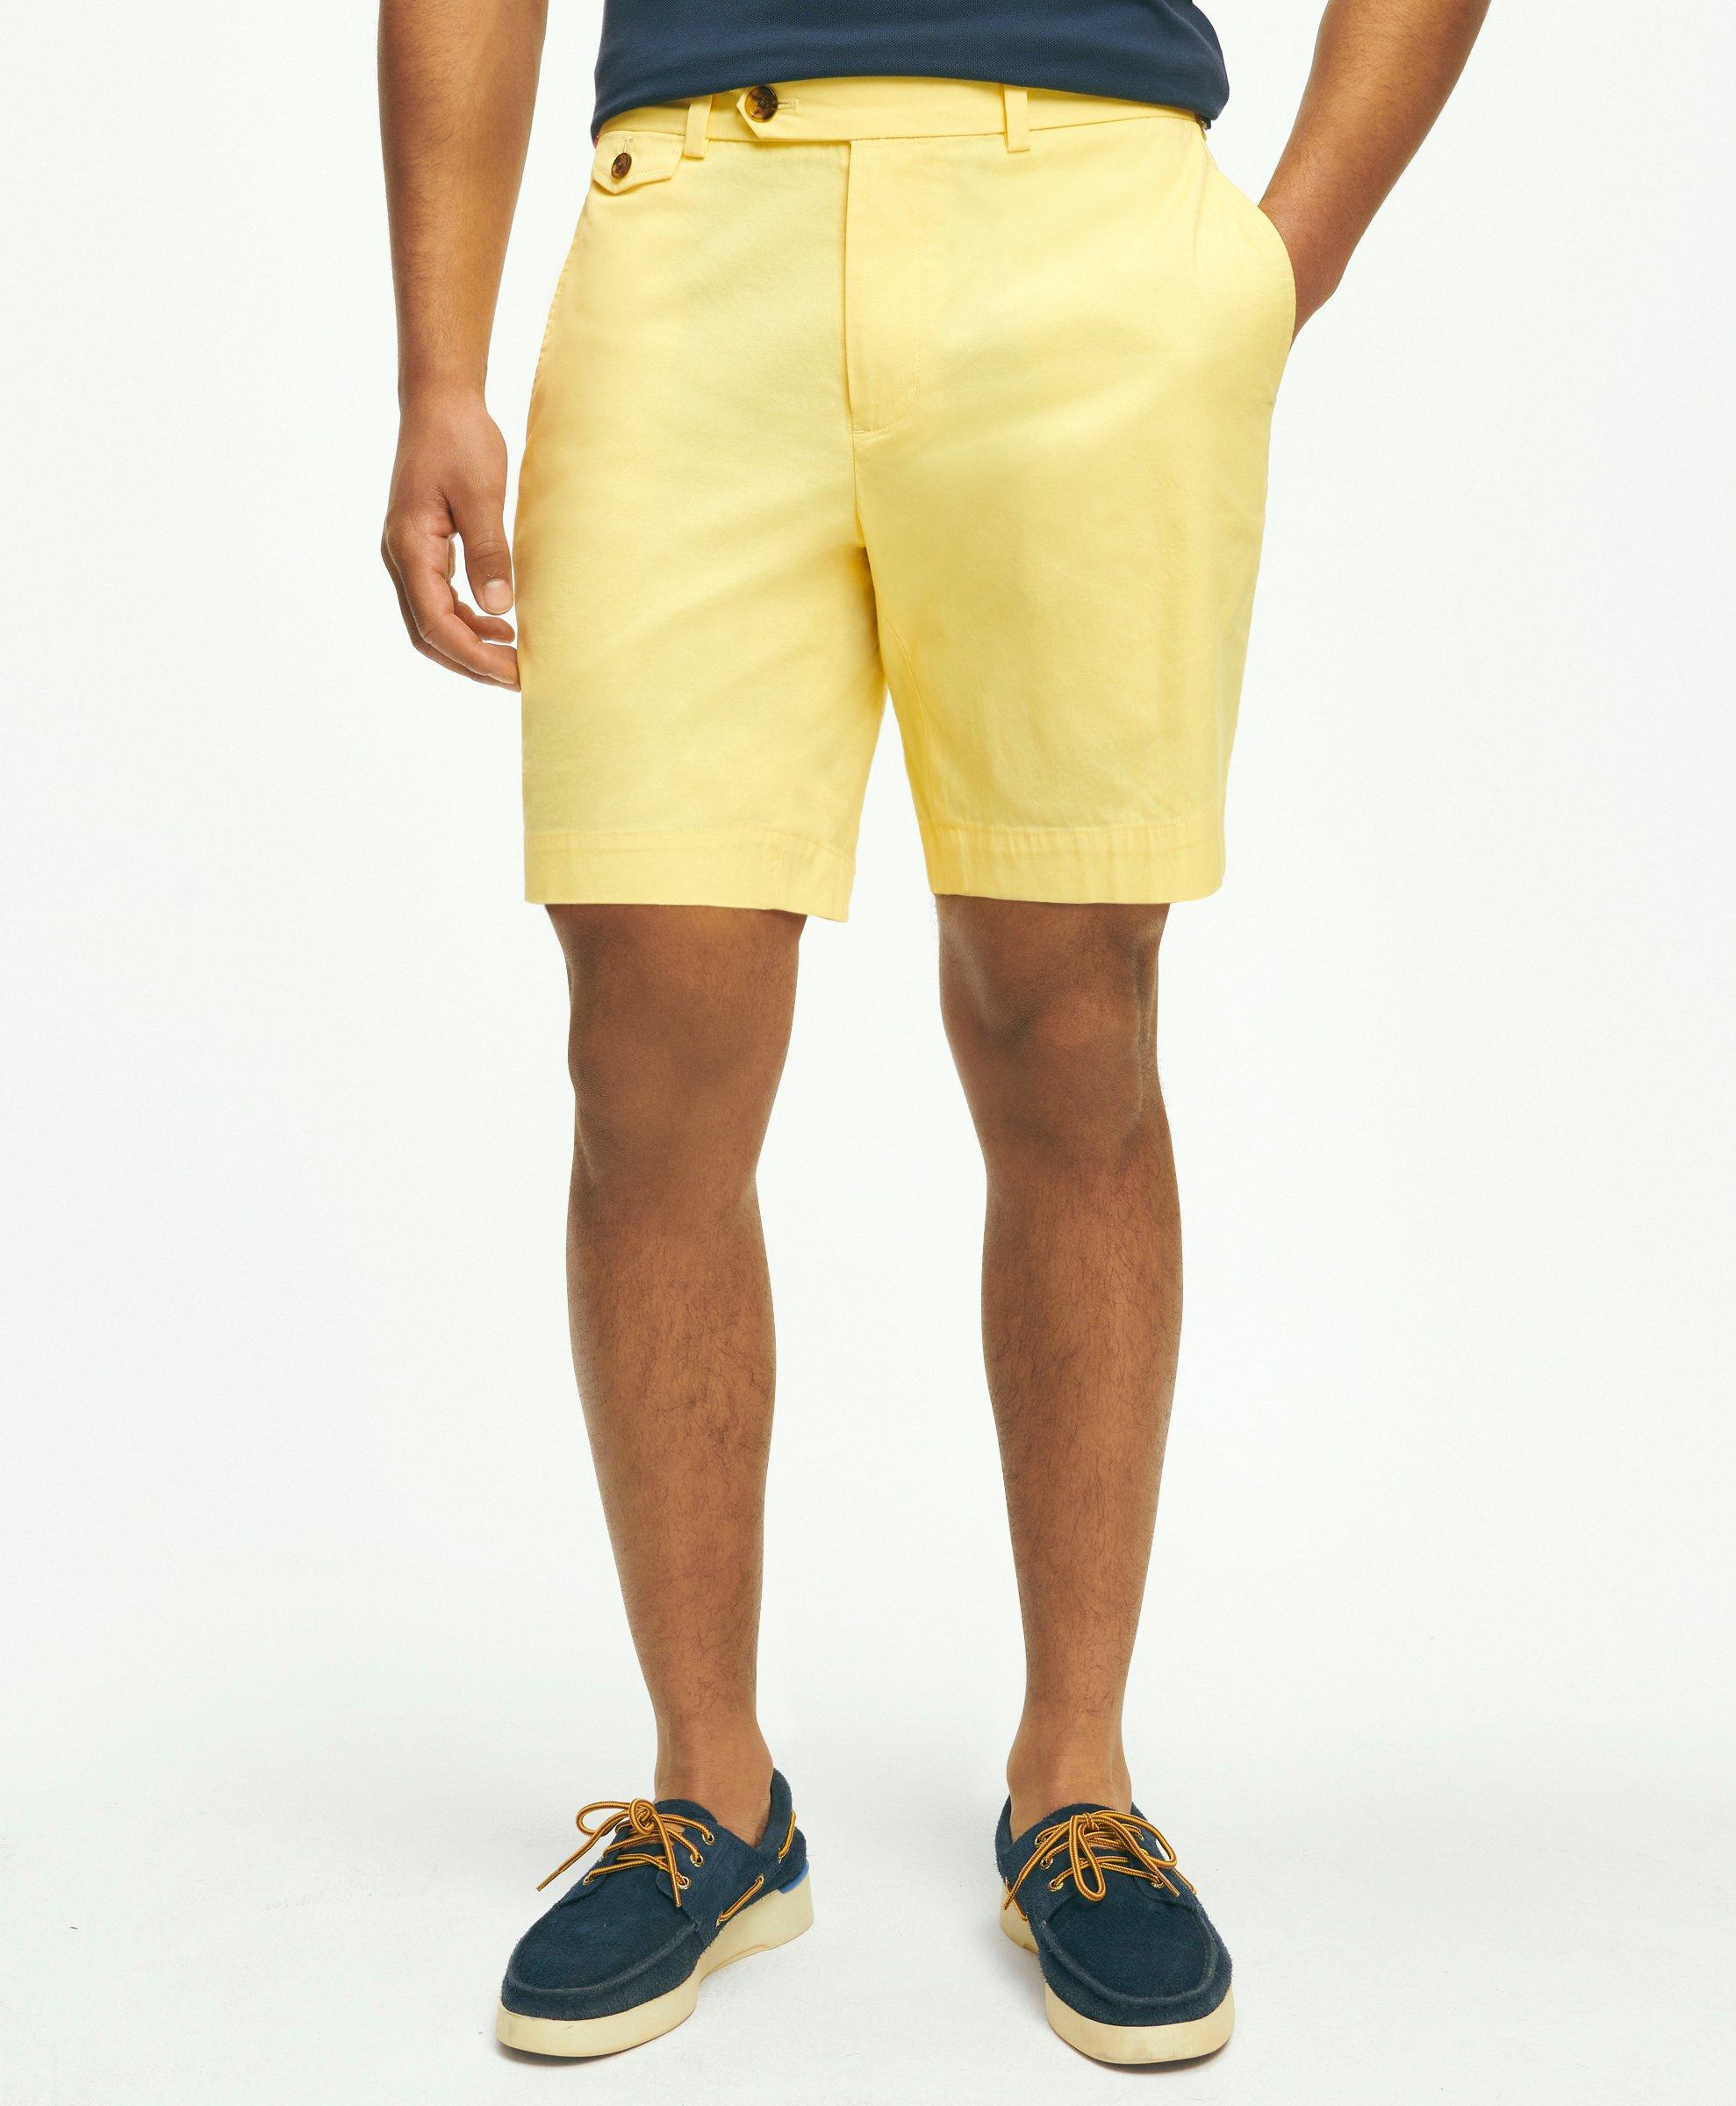 Men's plain dyed white cotton canvas Bermuda shorts